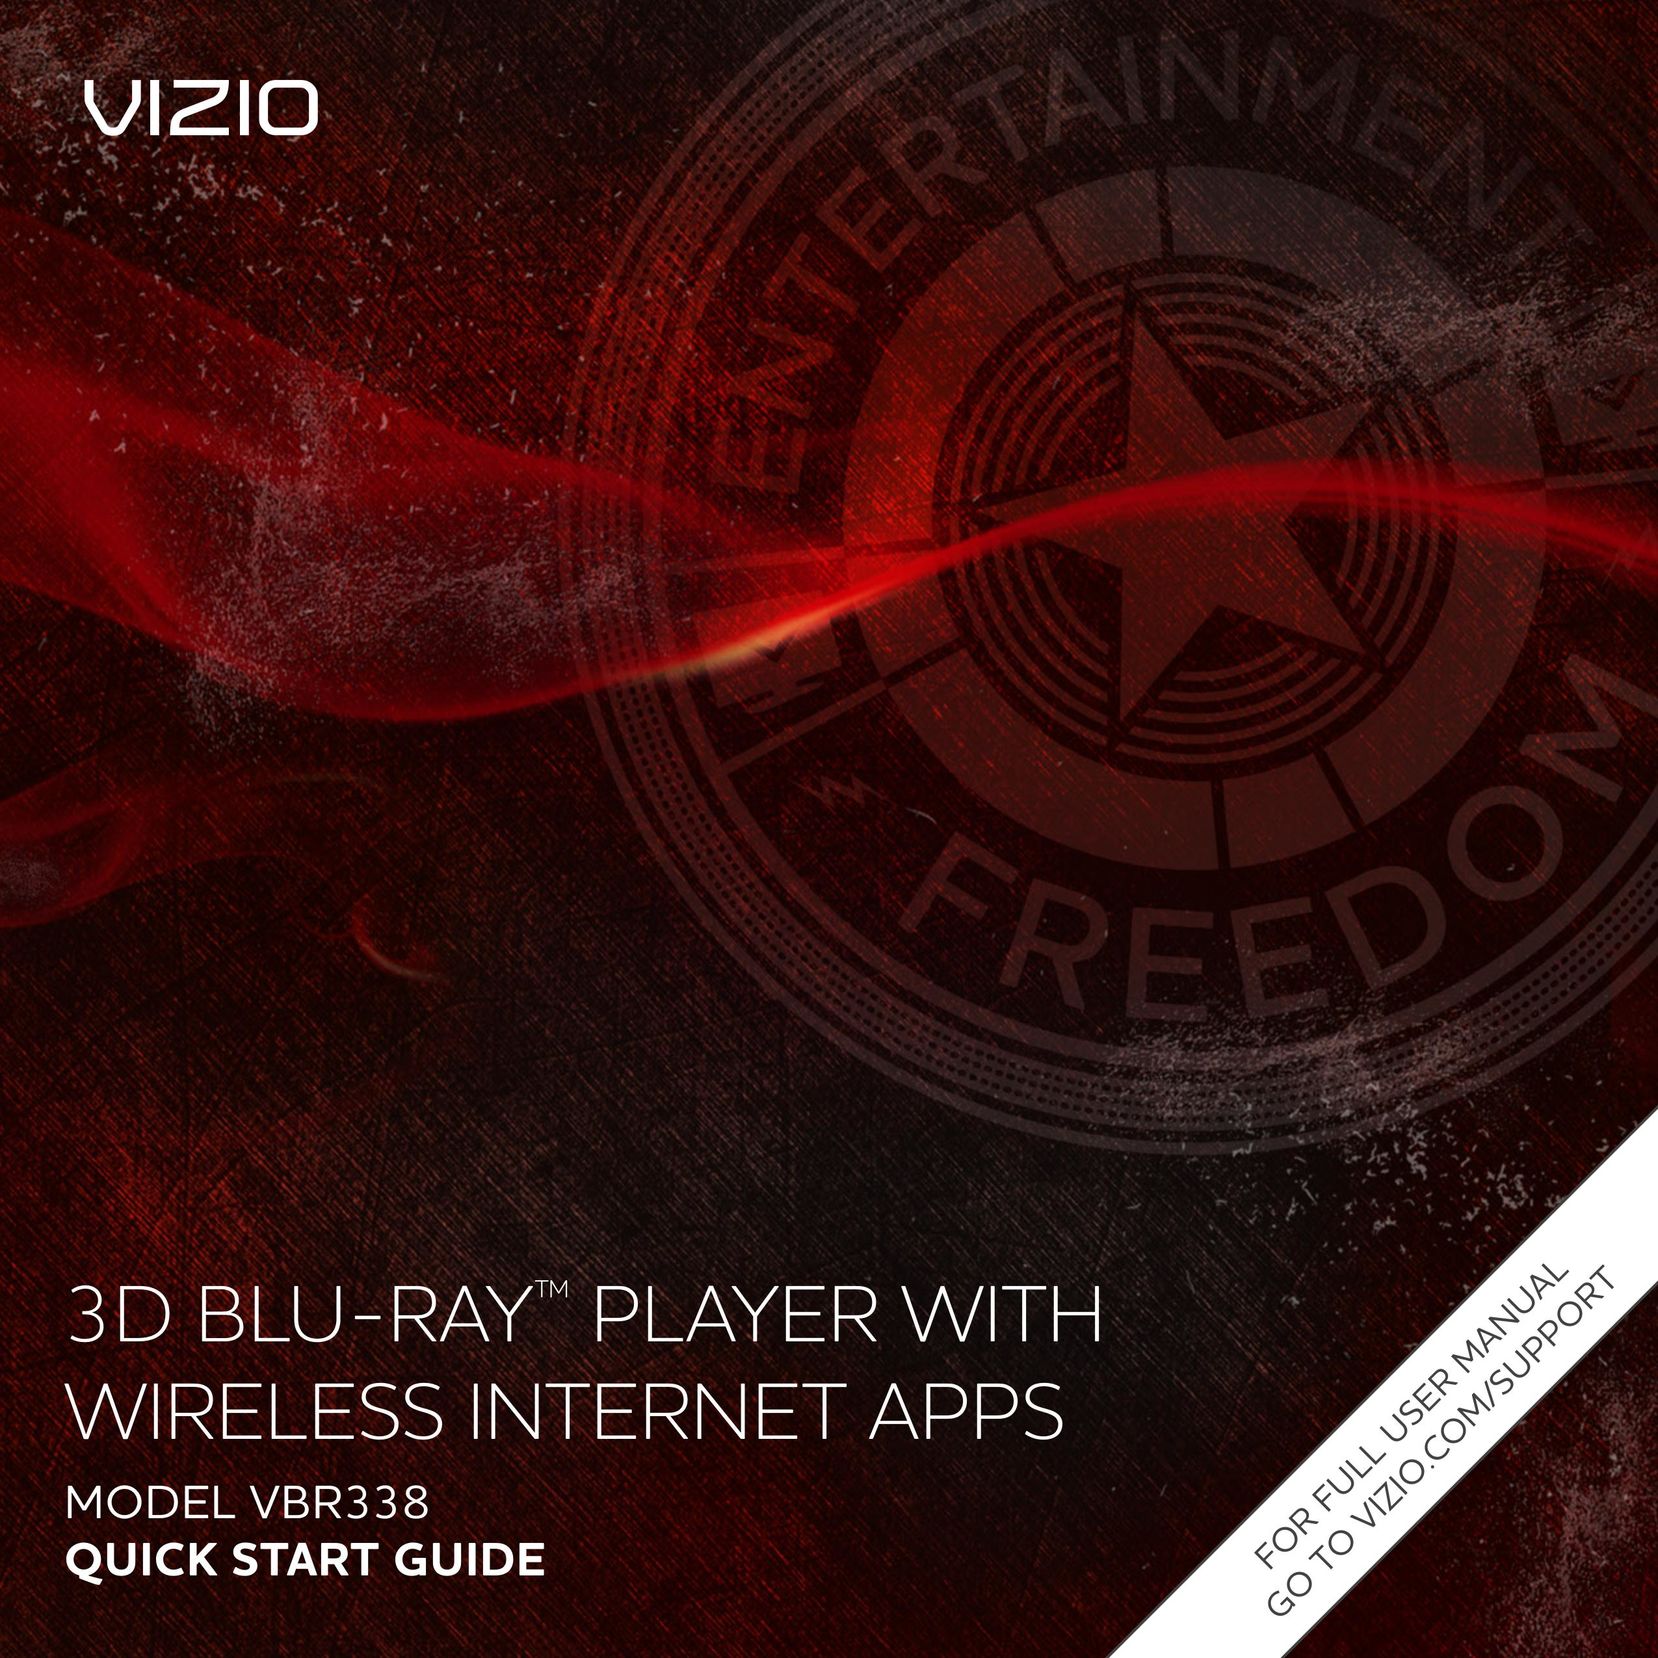 Vizio VBR338 Blu-ray Player User Manual